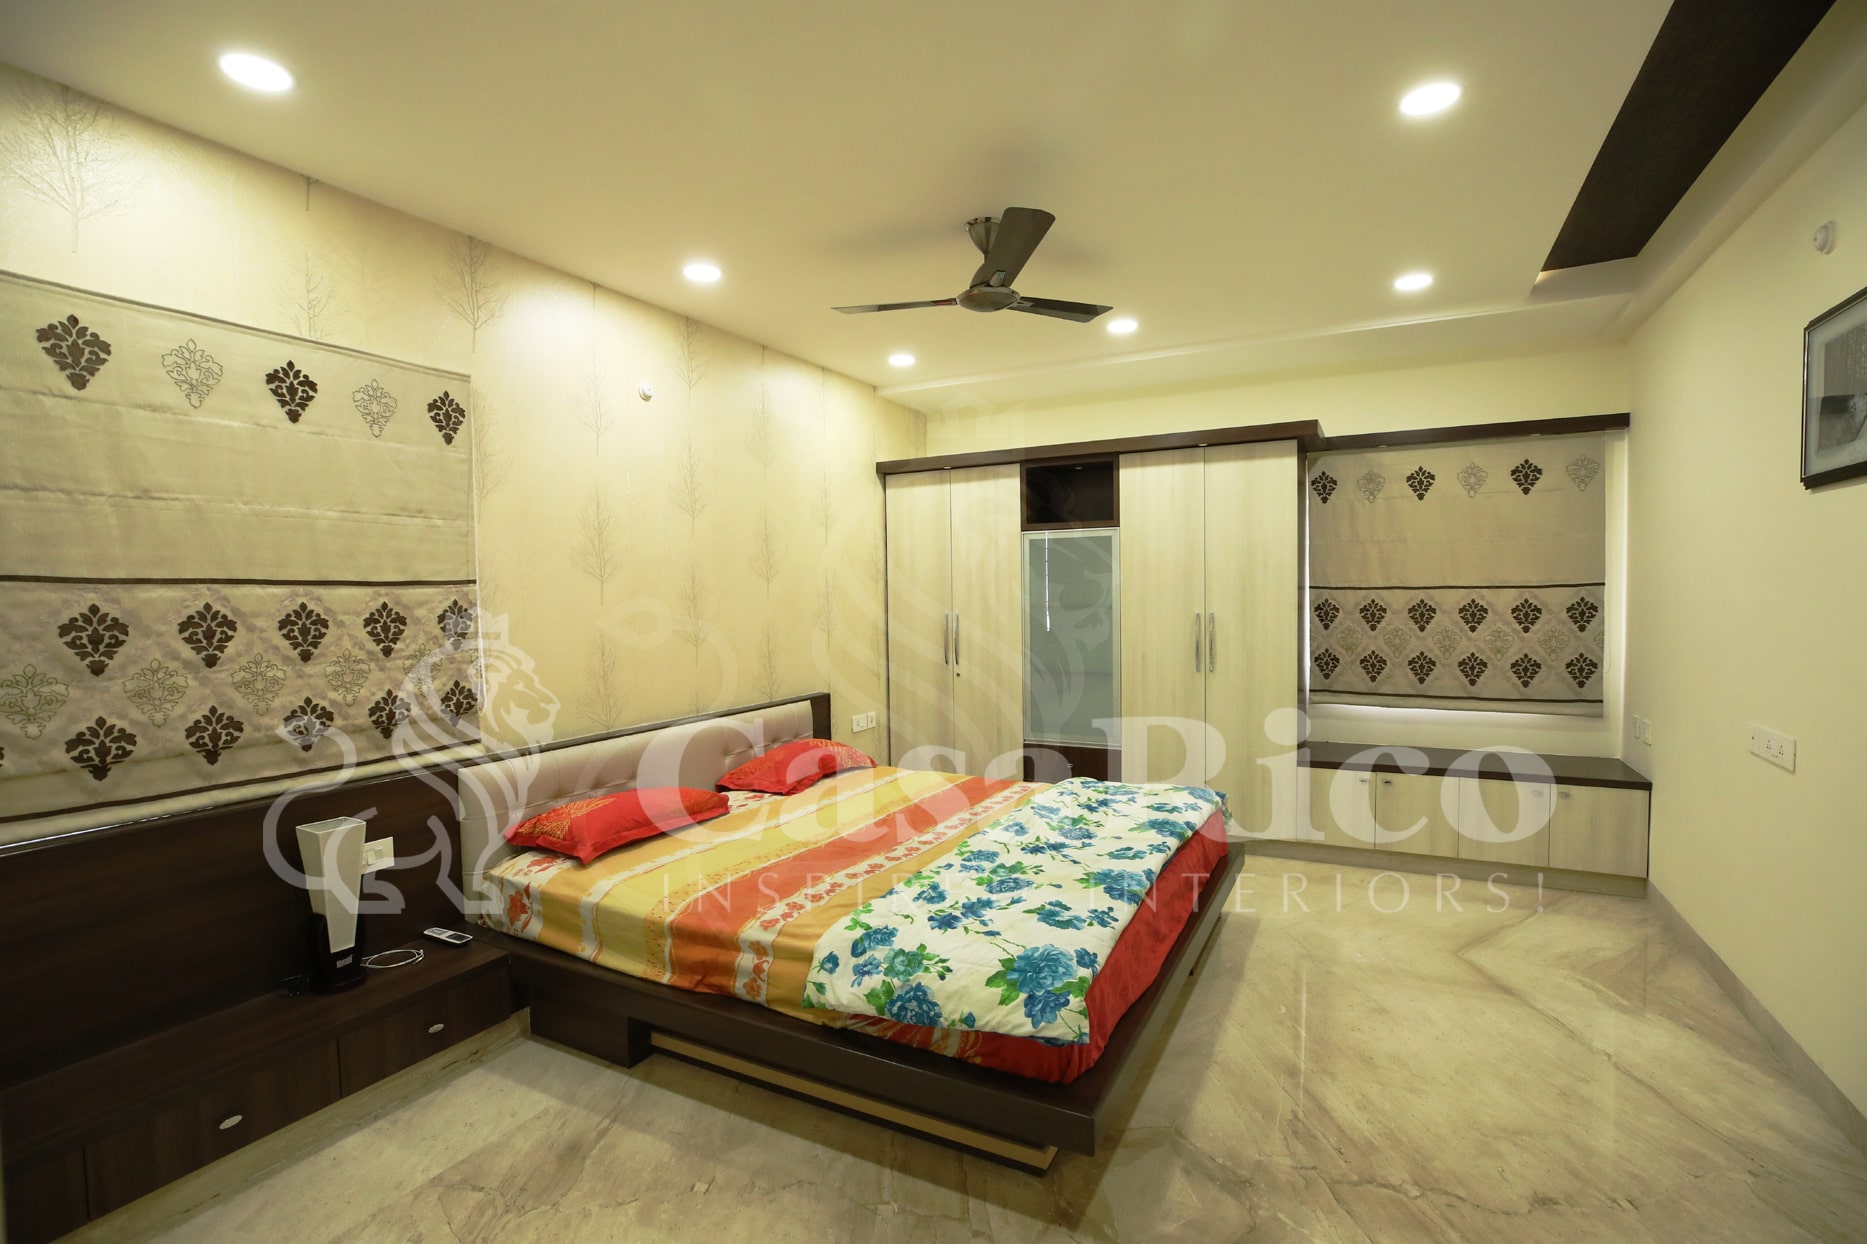 LUMBINI BROOKVILLE interior design for bedroom